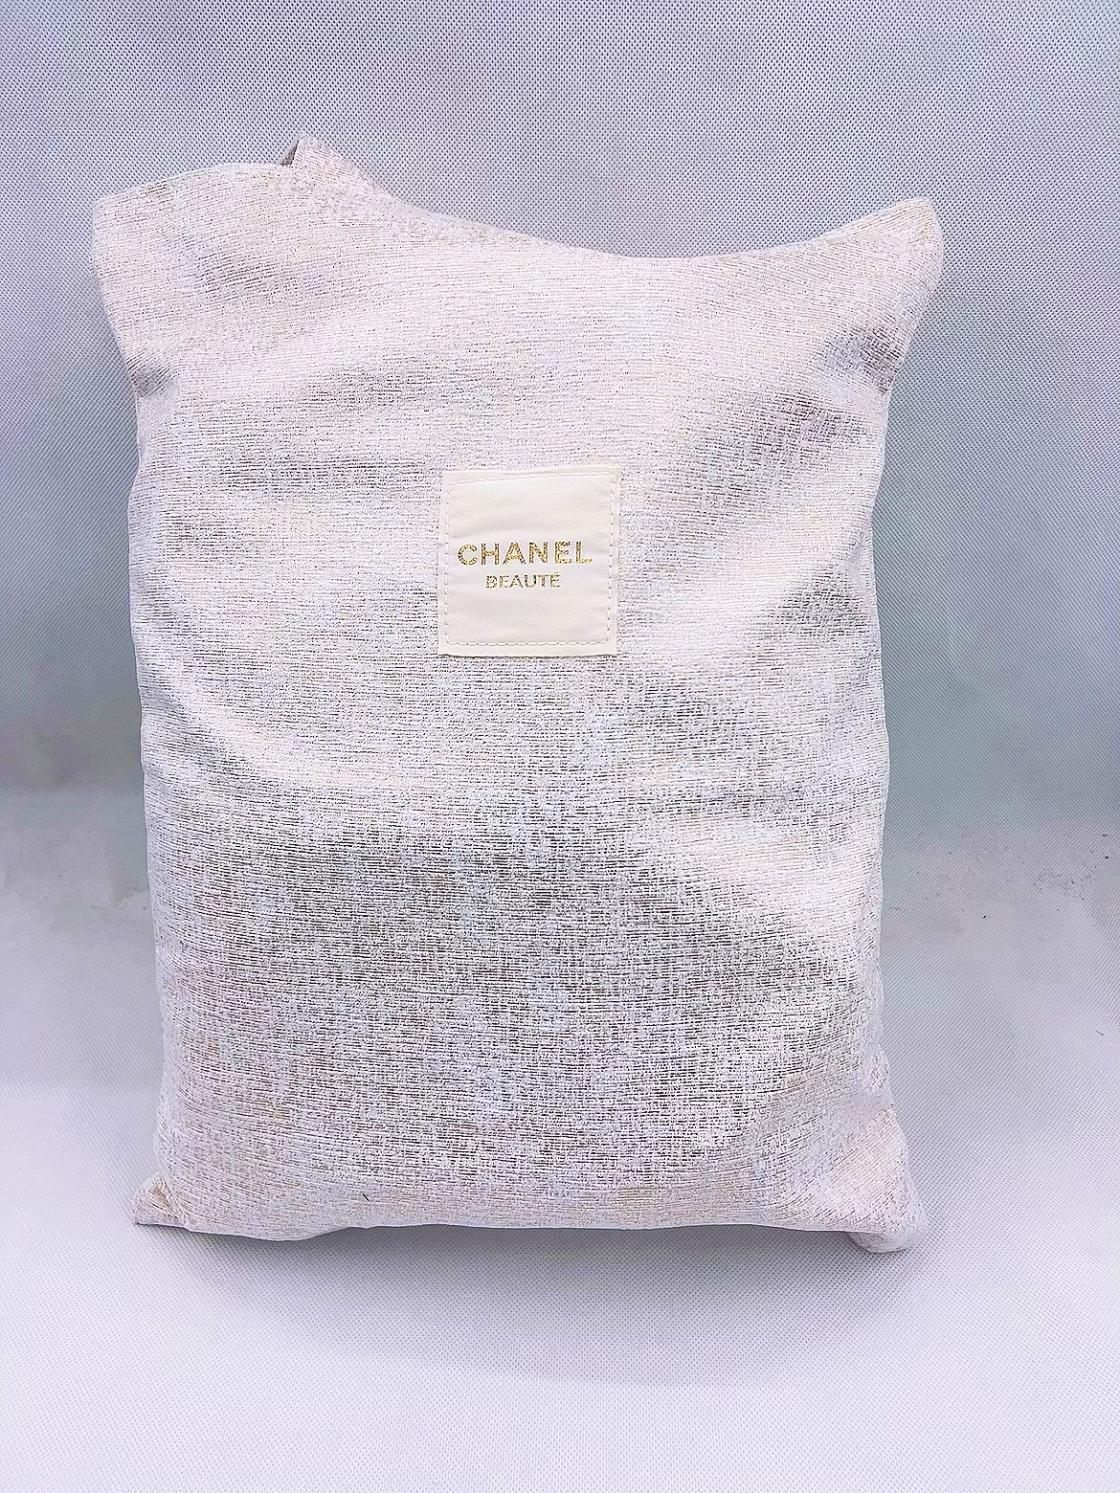 CHANEL Beauty VIP Gift New Flat Makeup Tote Bag Beige Glitter